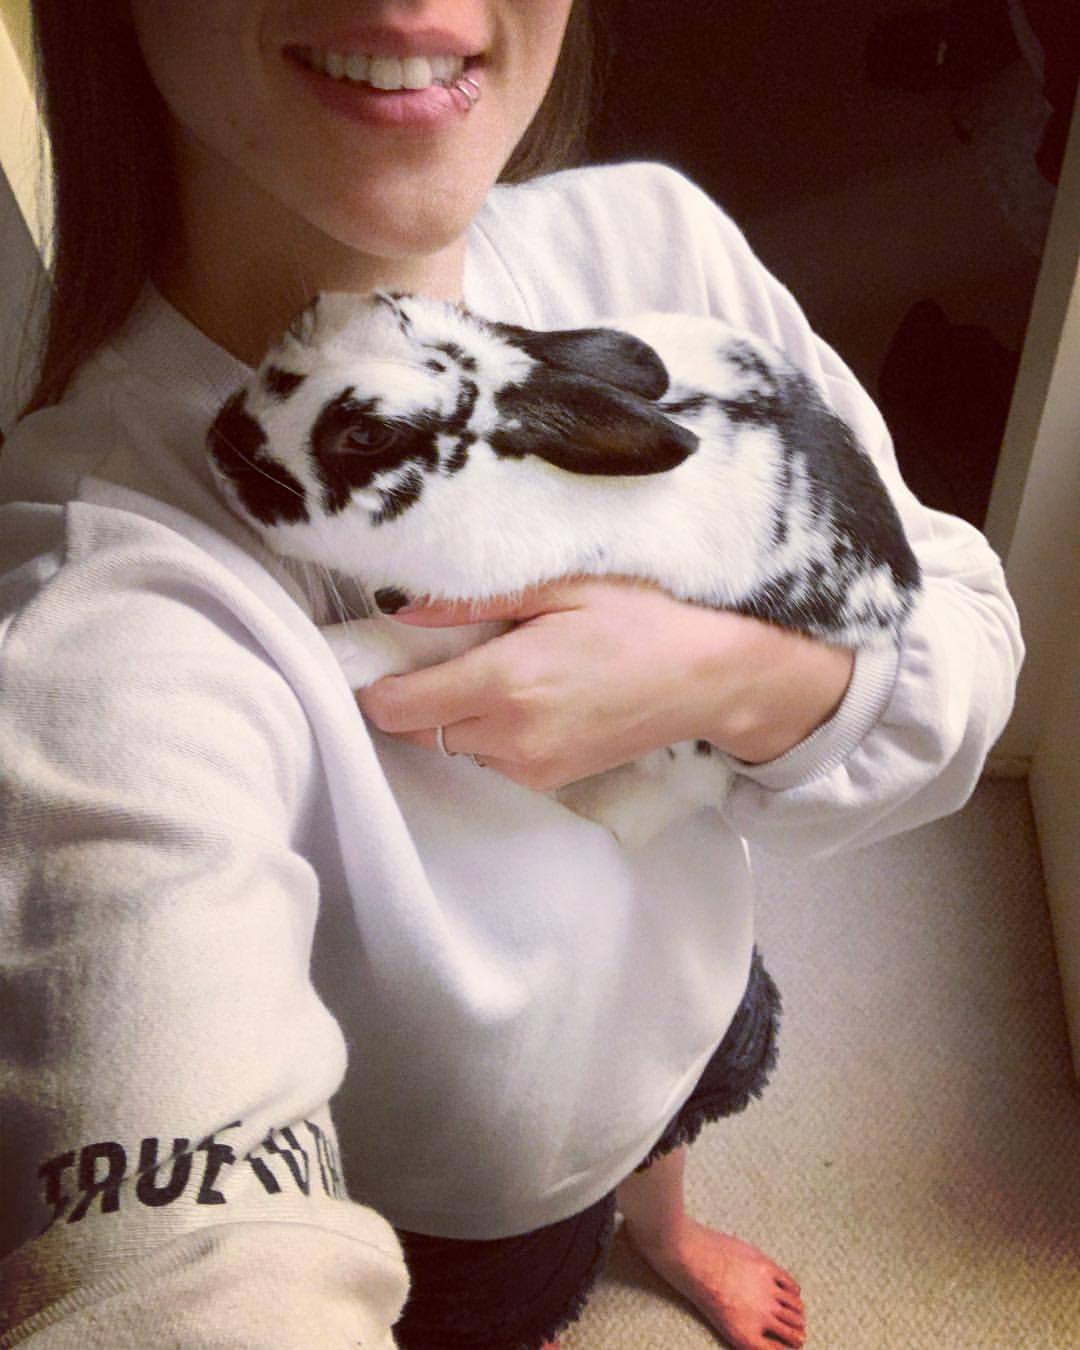 #Twinning w/ Bunny in Arcadia, CA #JPP #jesspetspets #rabbit #bunny bunniesofinstagram #pandarabbit #furbaby #beautiful #instapet #petdaily
https://www.instagram.com/p/BwuZK7YgdmD/?utm_source=ig_tumblr_share&igshid=hnx0jvniprus